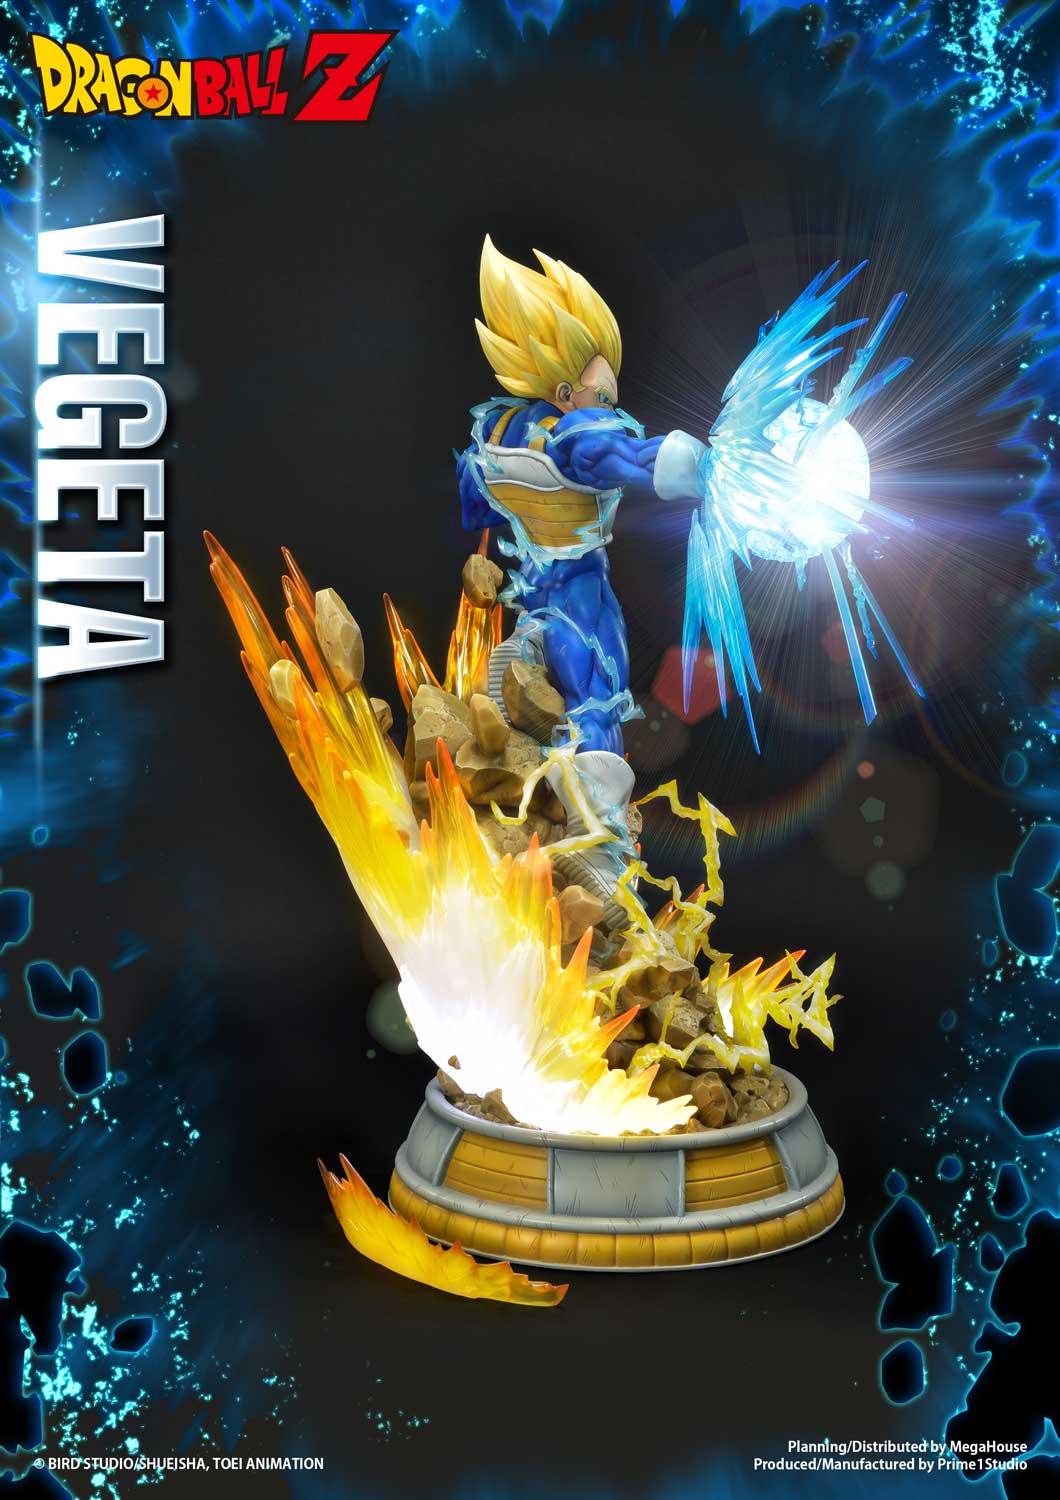 Dragon Ball Final Flash Vegeta Statue - Player 1 Studio [Pre-Order